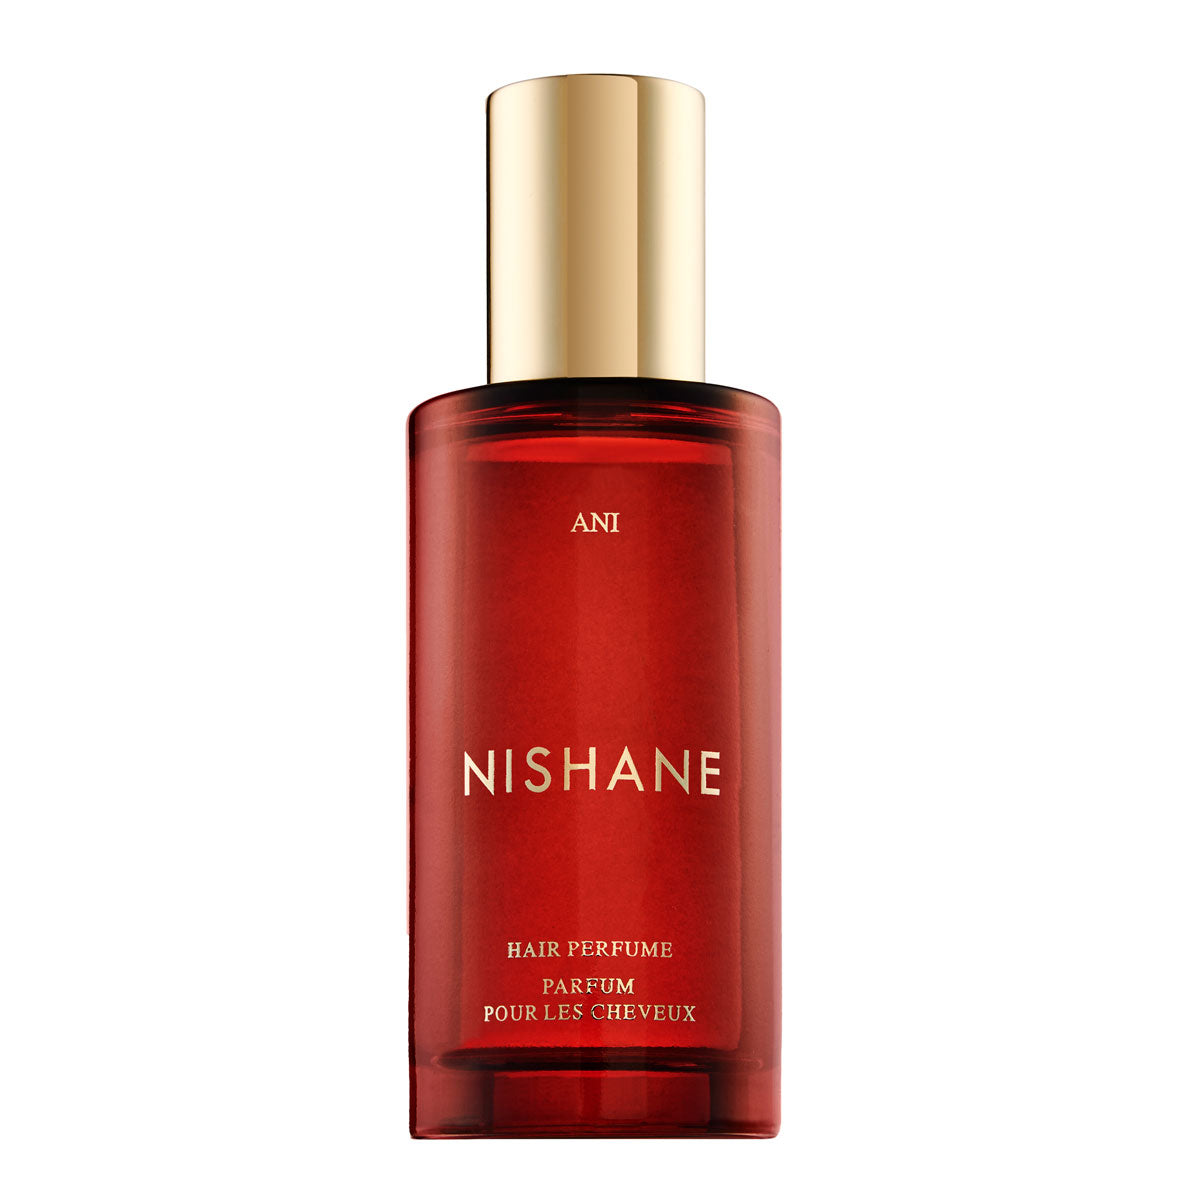 ANI - NISHANE - Hair Perfume 50ml